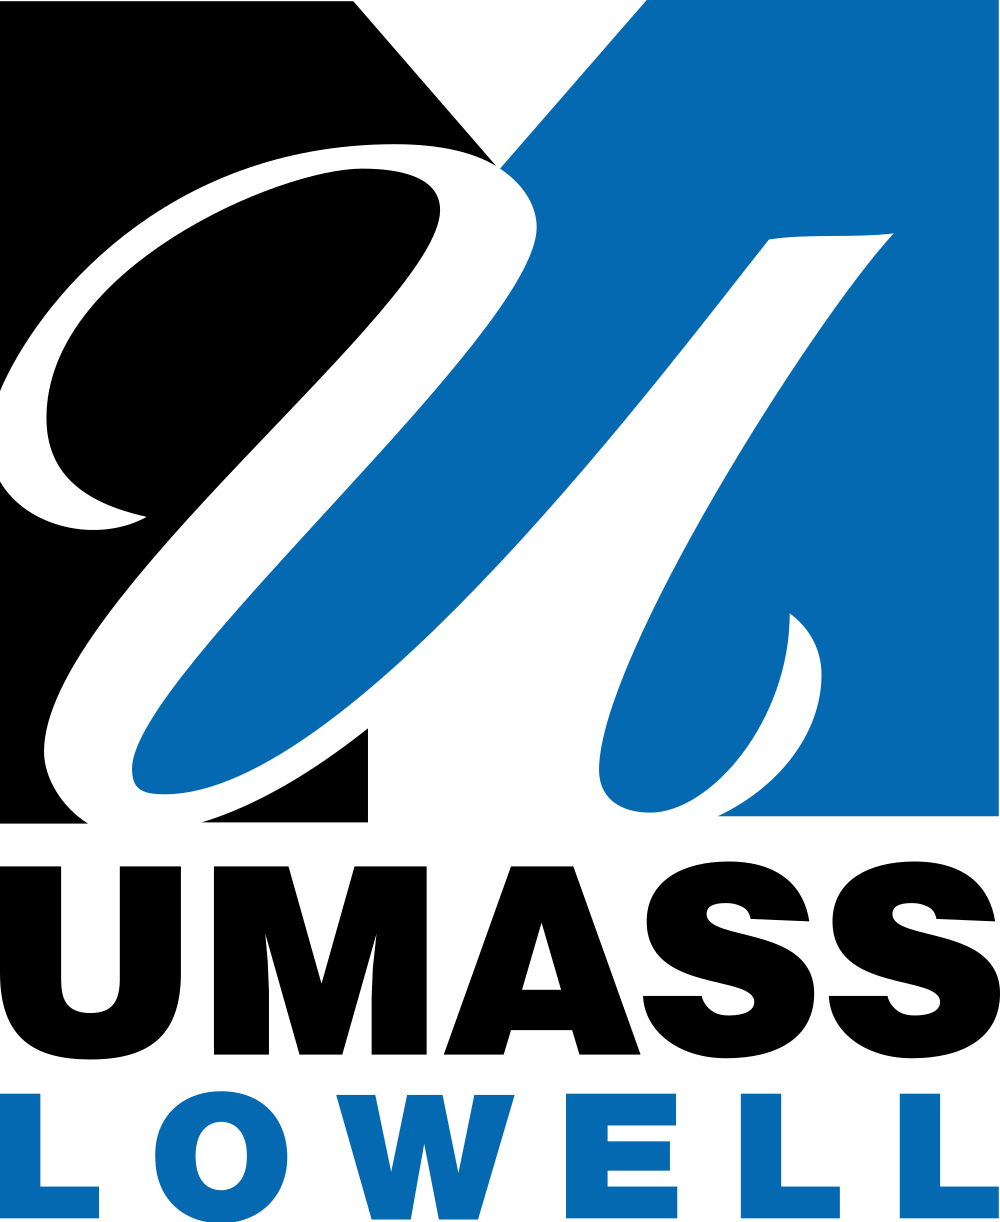 University of Massachusetts Lowell logo png transparent